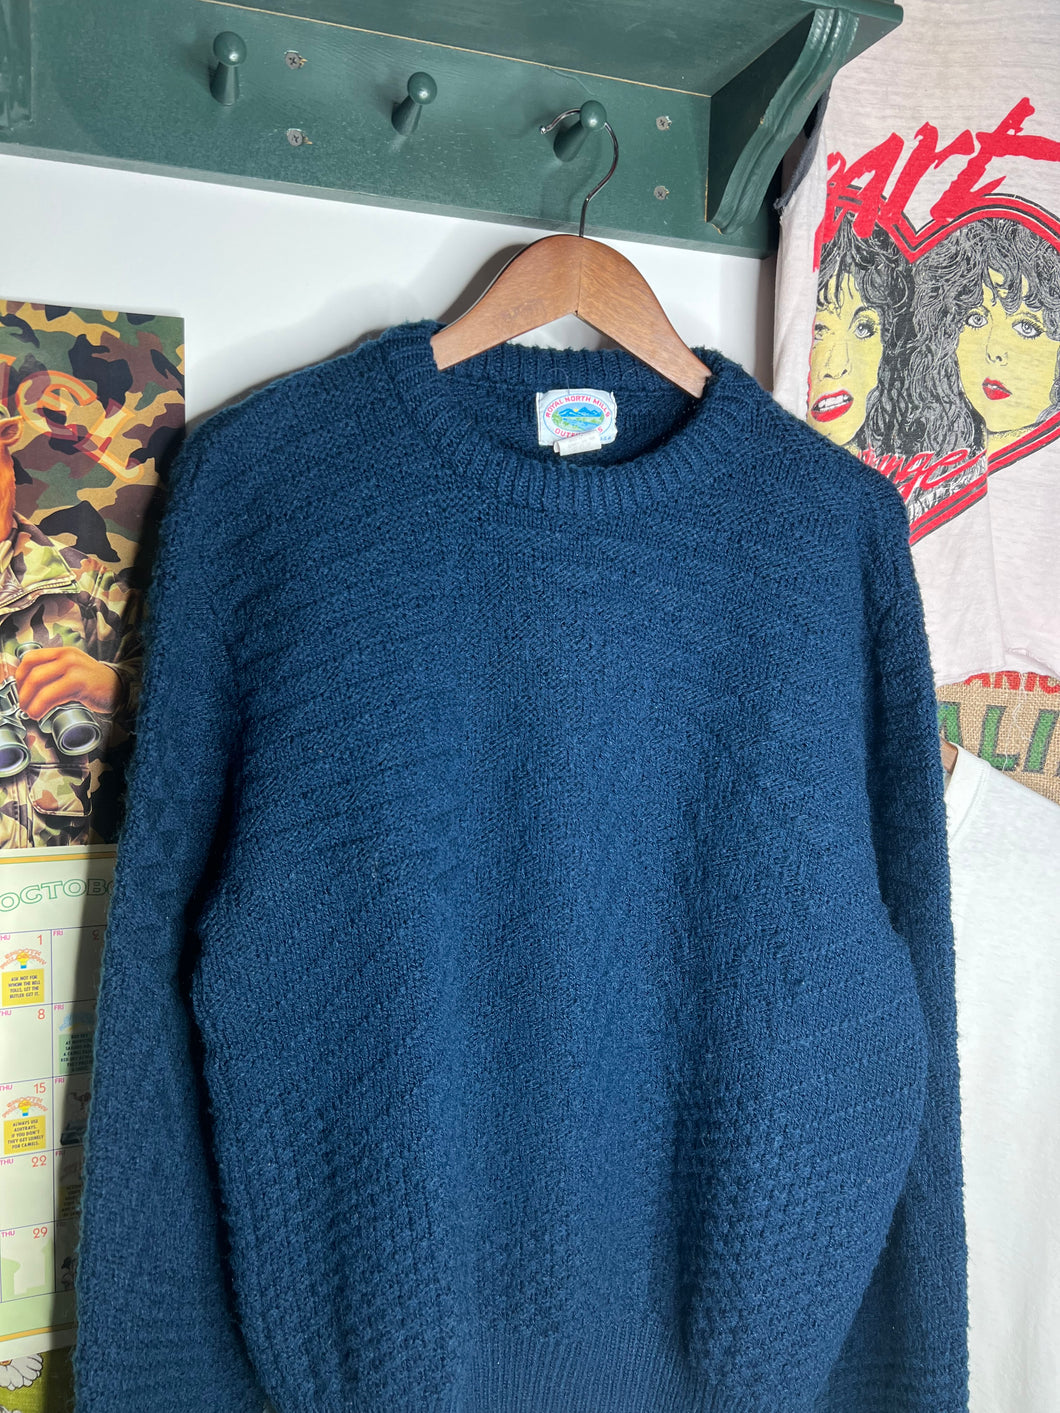 Vintage Royal North Mills Knit Sweater (L)